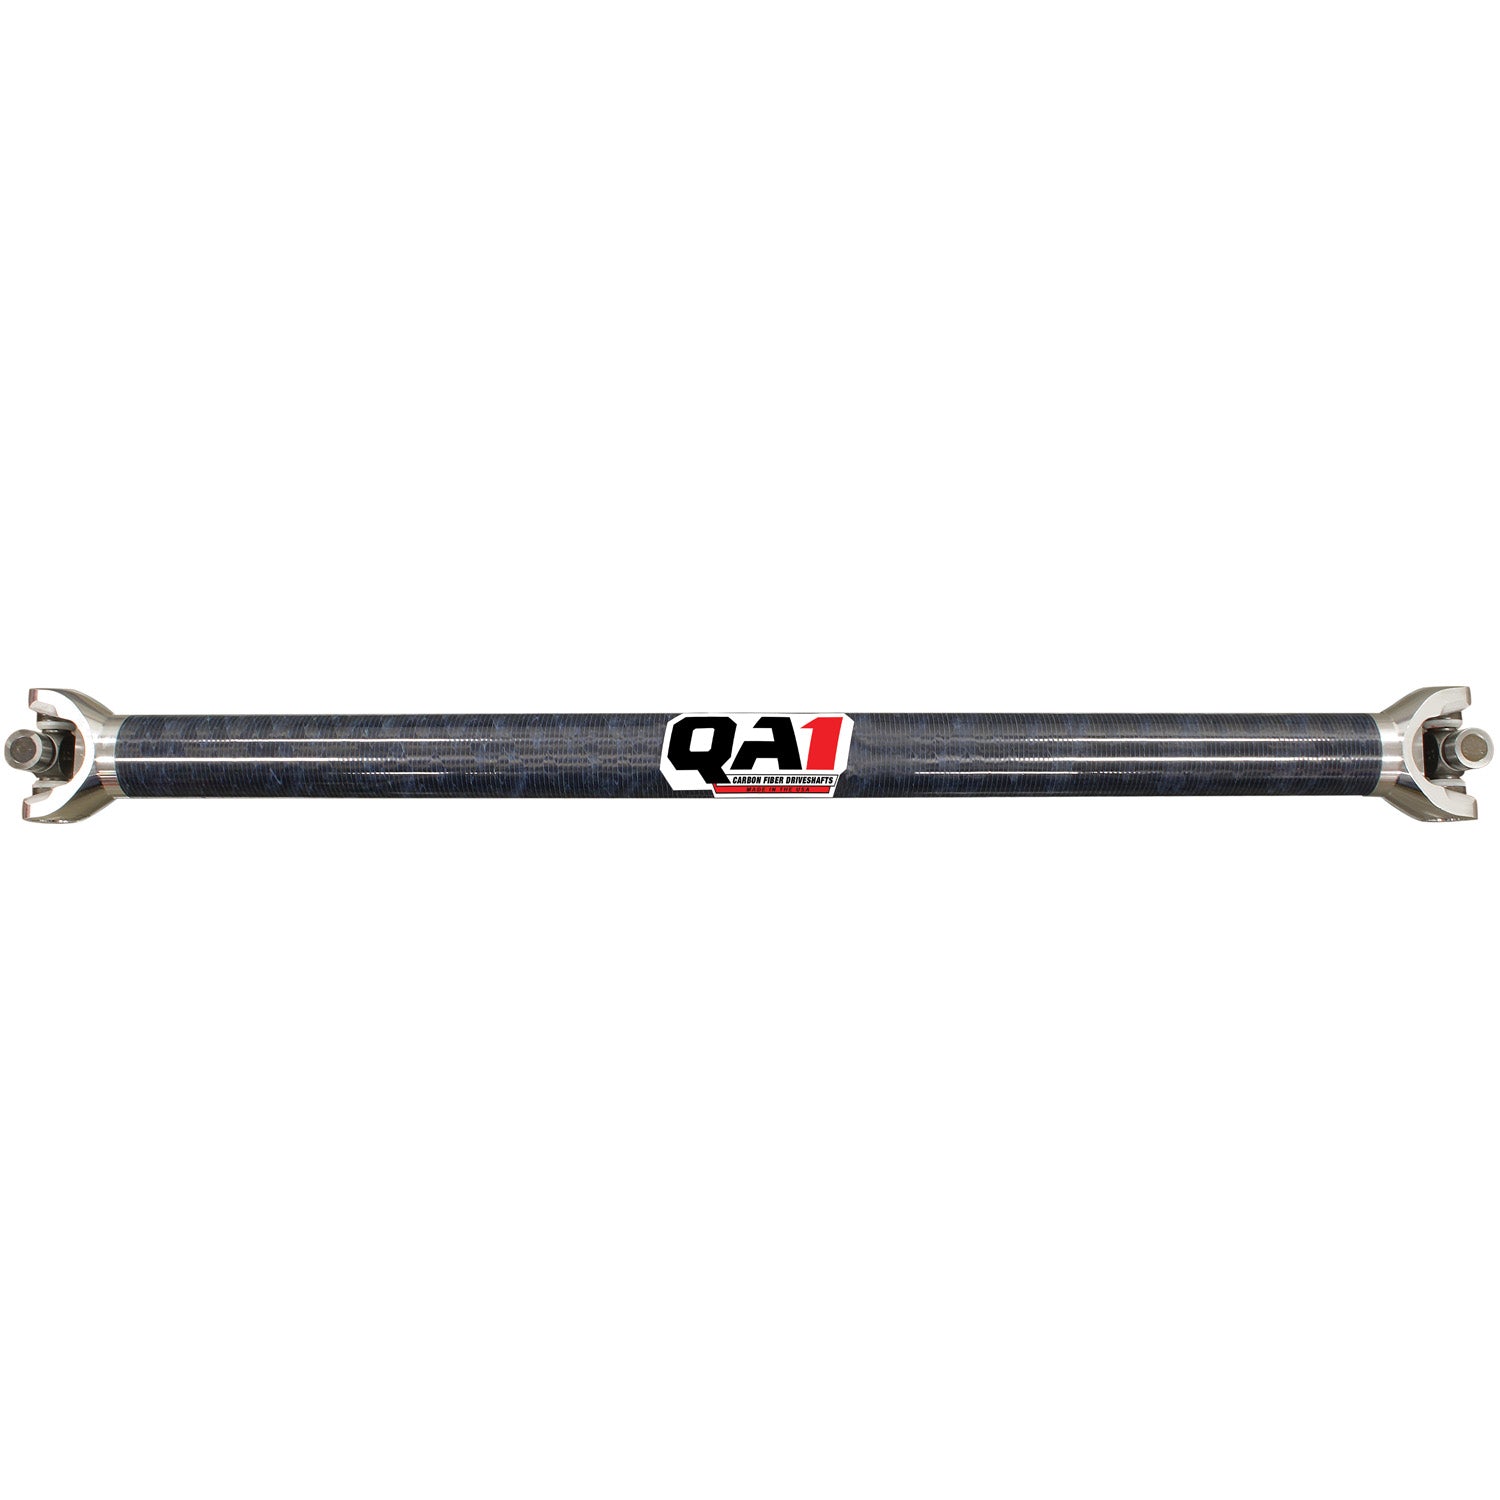 QA1 JJ-12211 Driveshaft, CF, CT-Dirt-Mod, 30.00 inch 2.3 inch, 1310 U-Joint, 1500Lb.